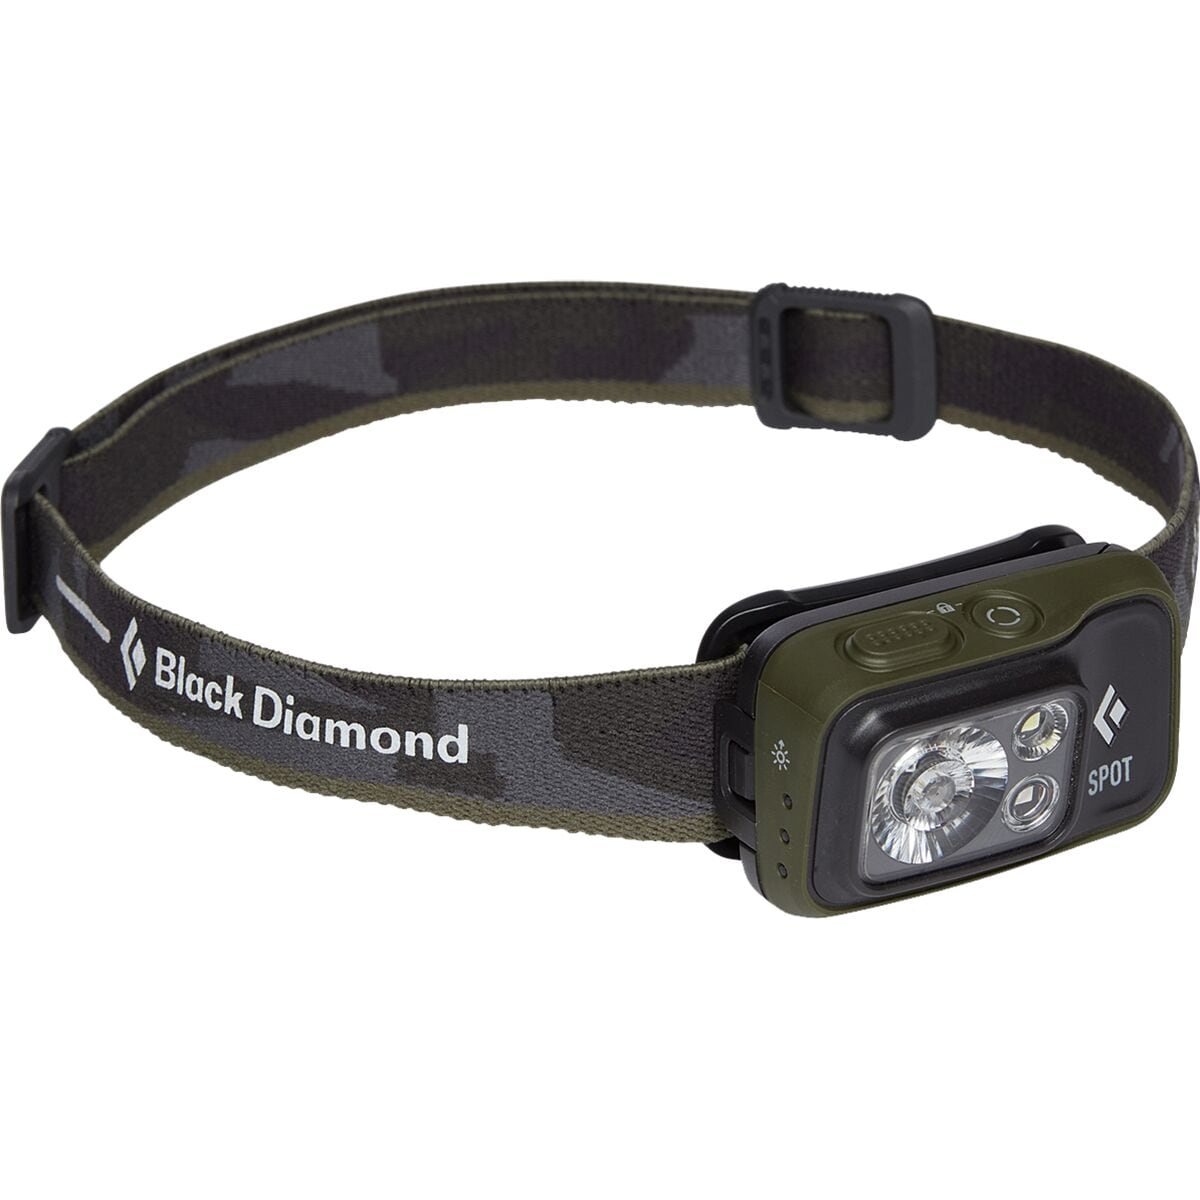  Black Diamond Spot 400 Headlamp - Hike & Camp